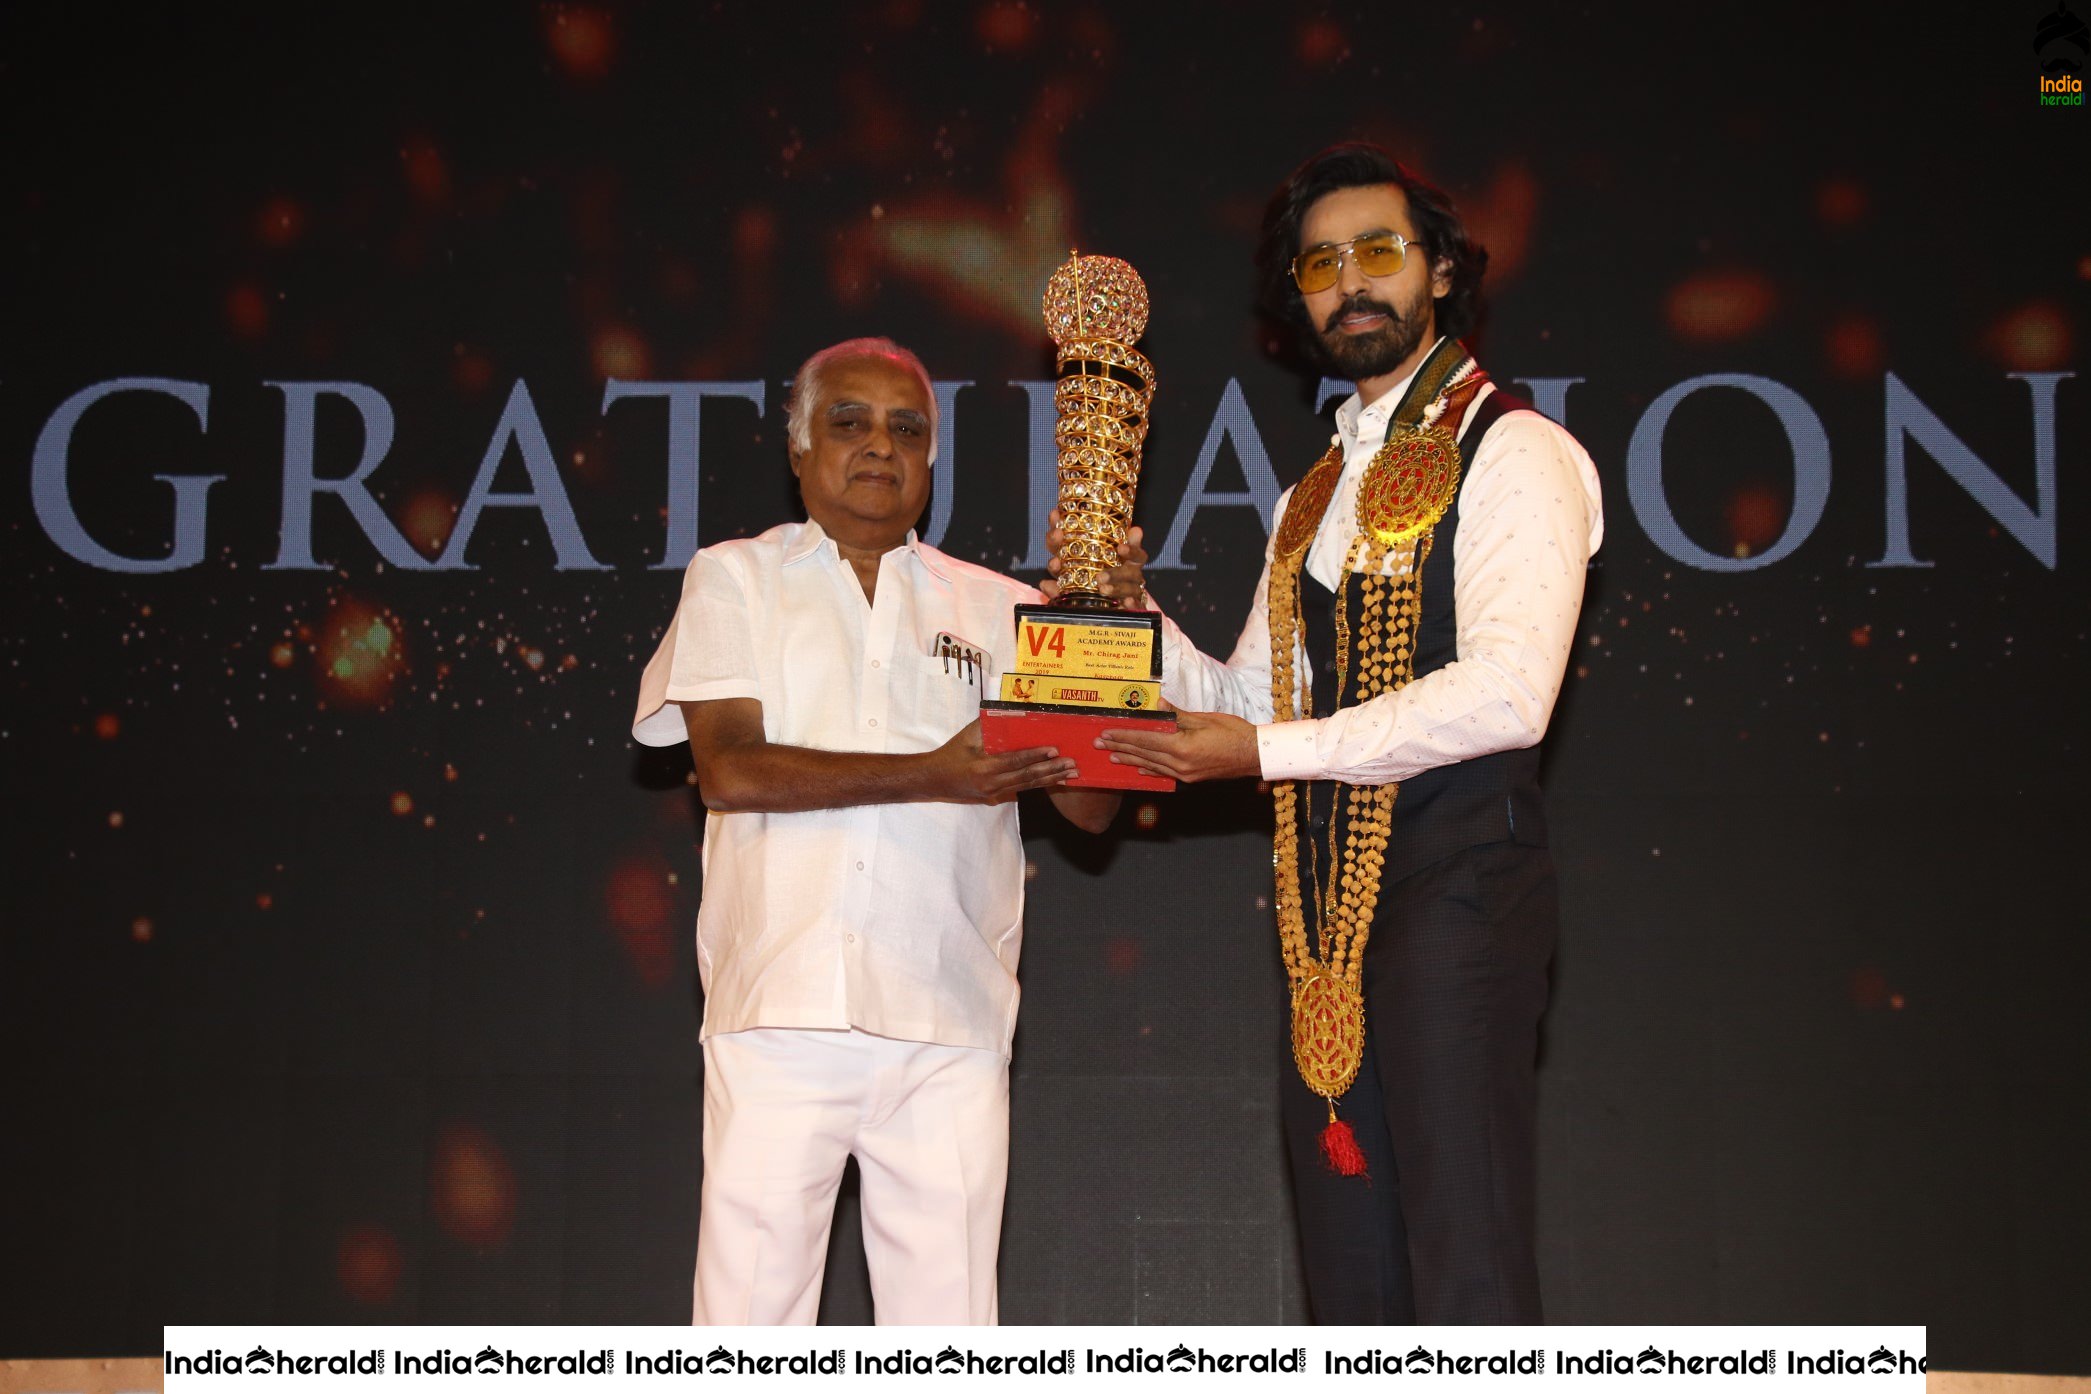 V4Academy Awards Event Photos at Chennai Set 2